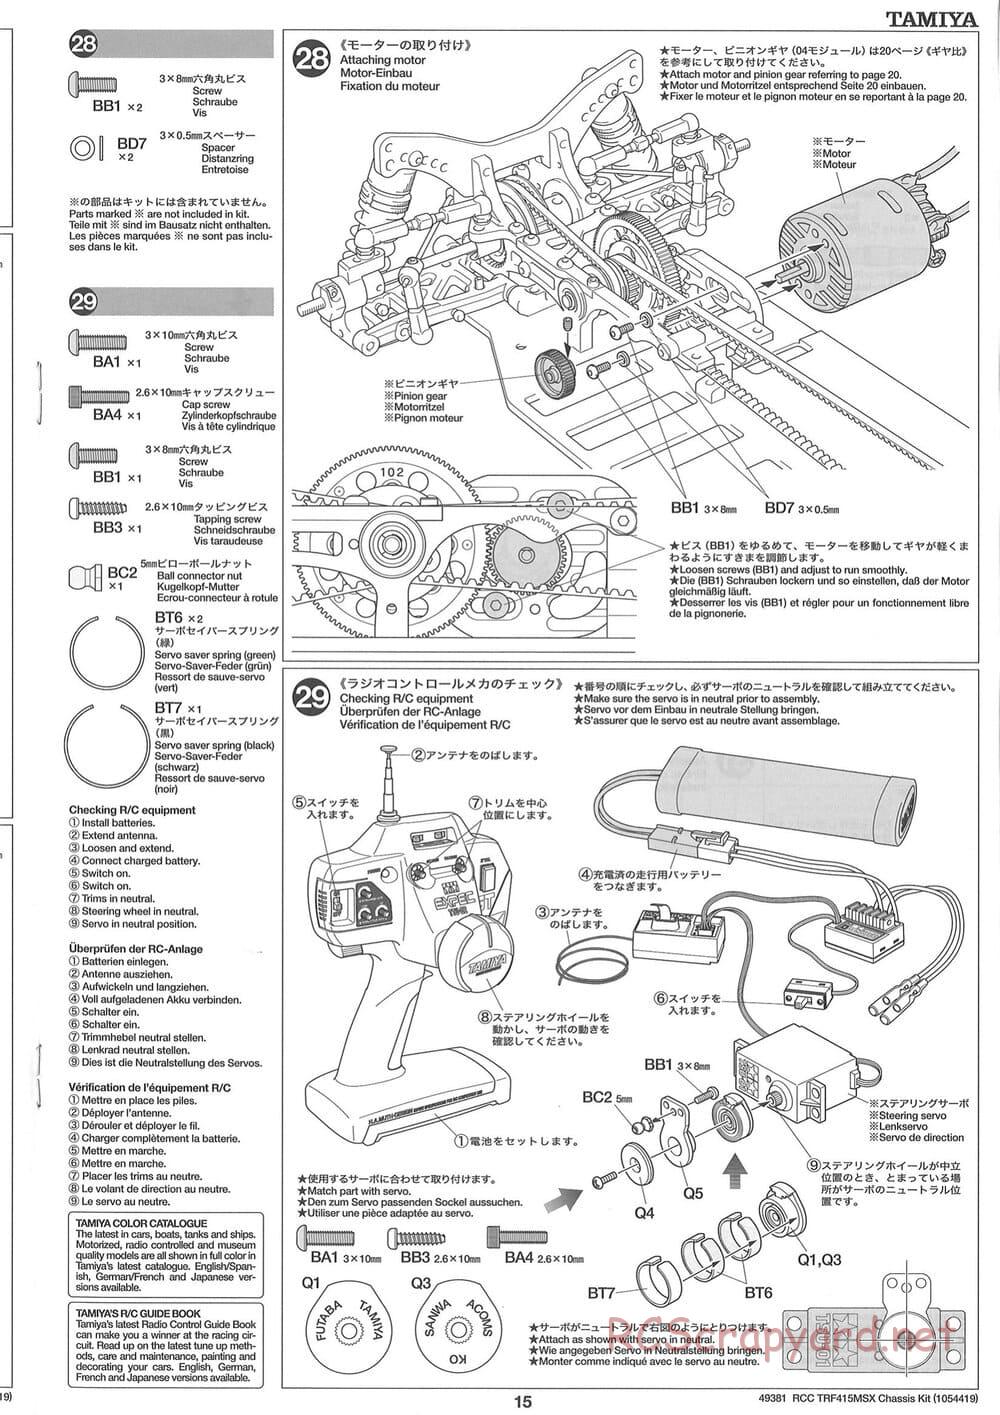 Tamiya - TRF415-MSX Chassis - Manual - Page 15